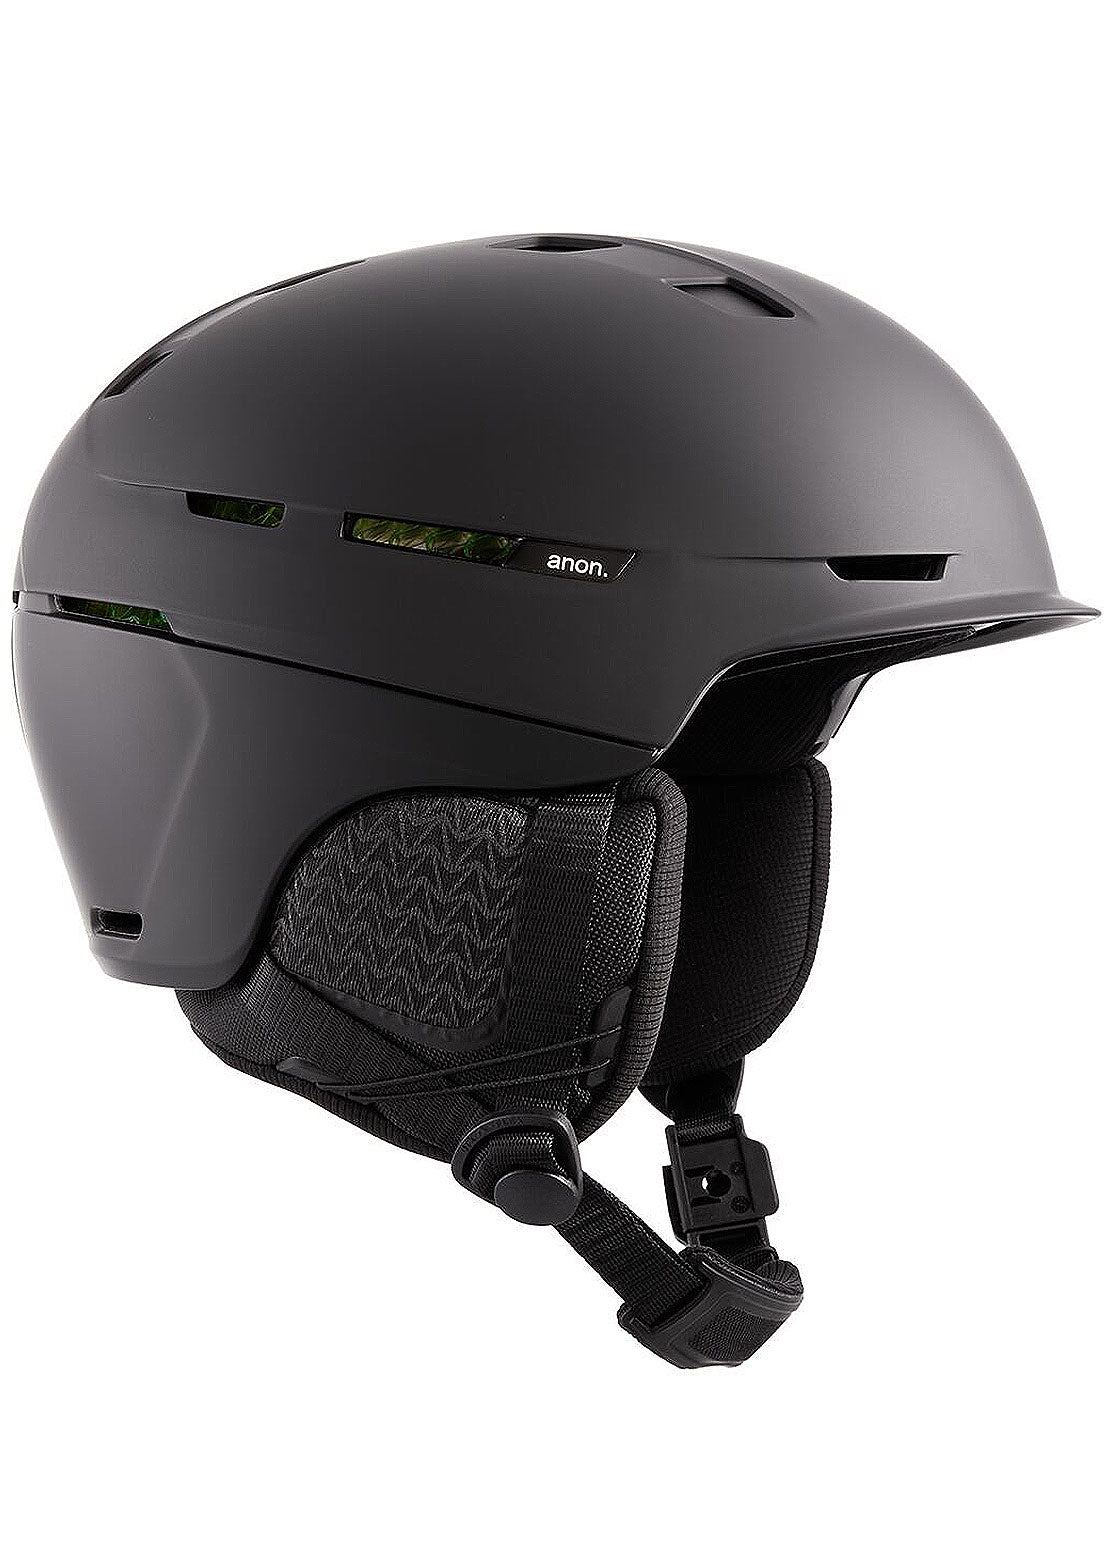 Anon Unisex Merak WaveCel Winter Helmet Black